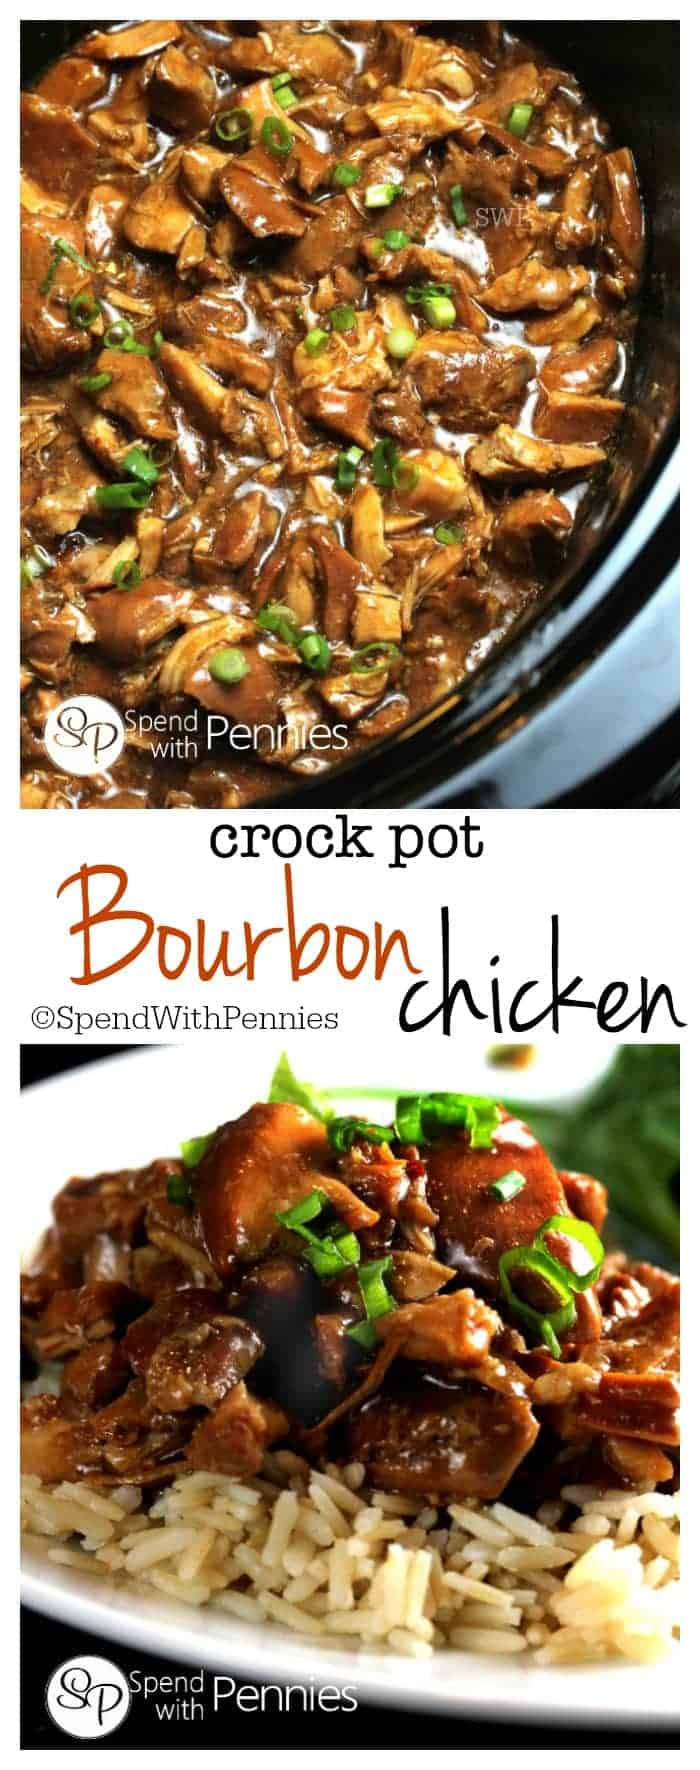 Diabetic Crockpot Chicken Recipes
 Crockpot Bourbon Chicken Spend With Pennies